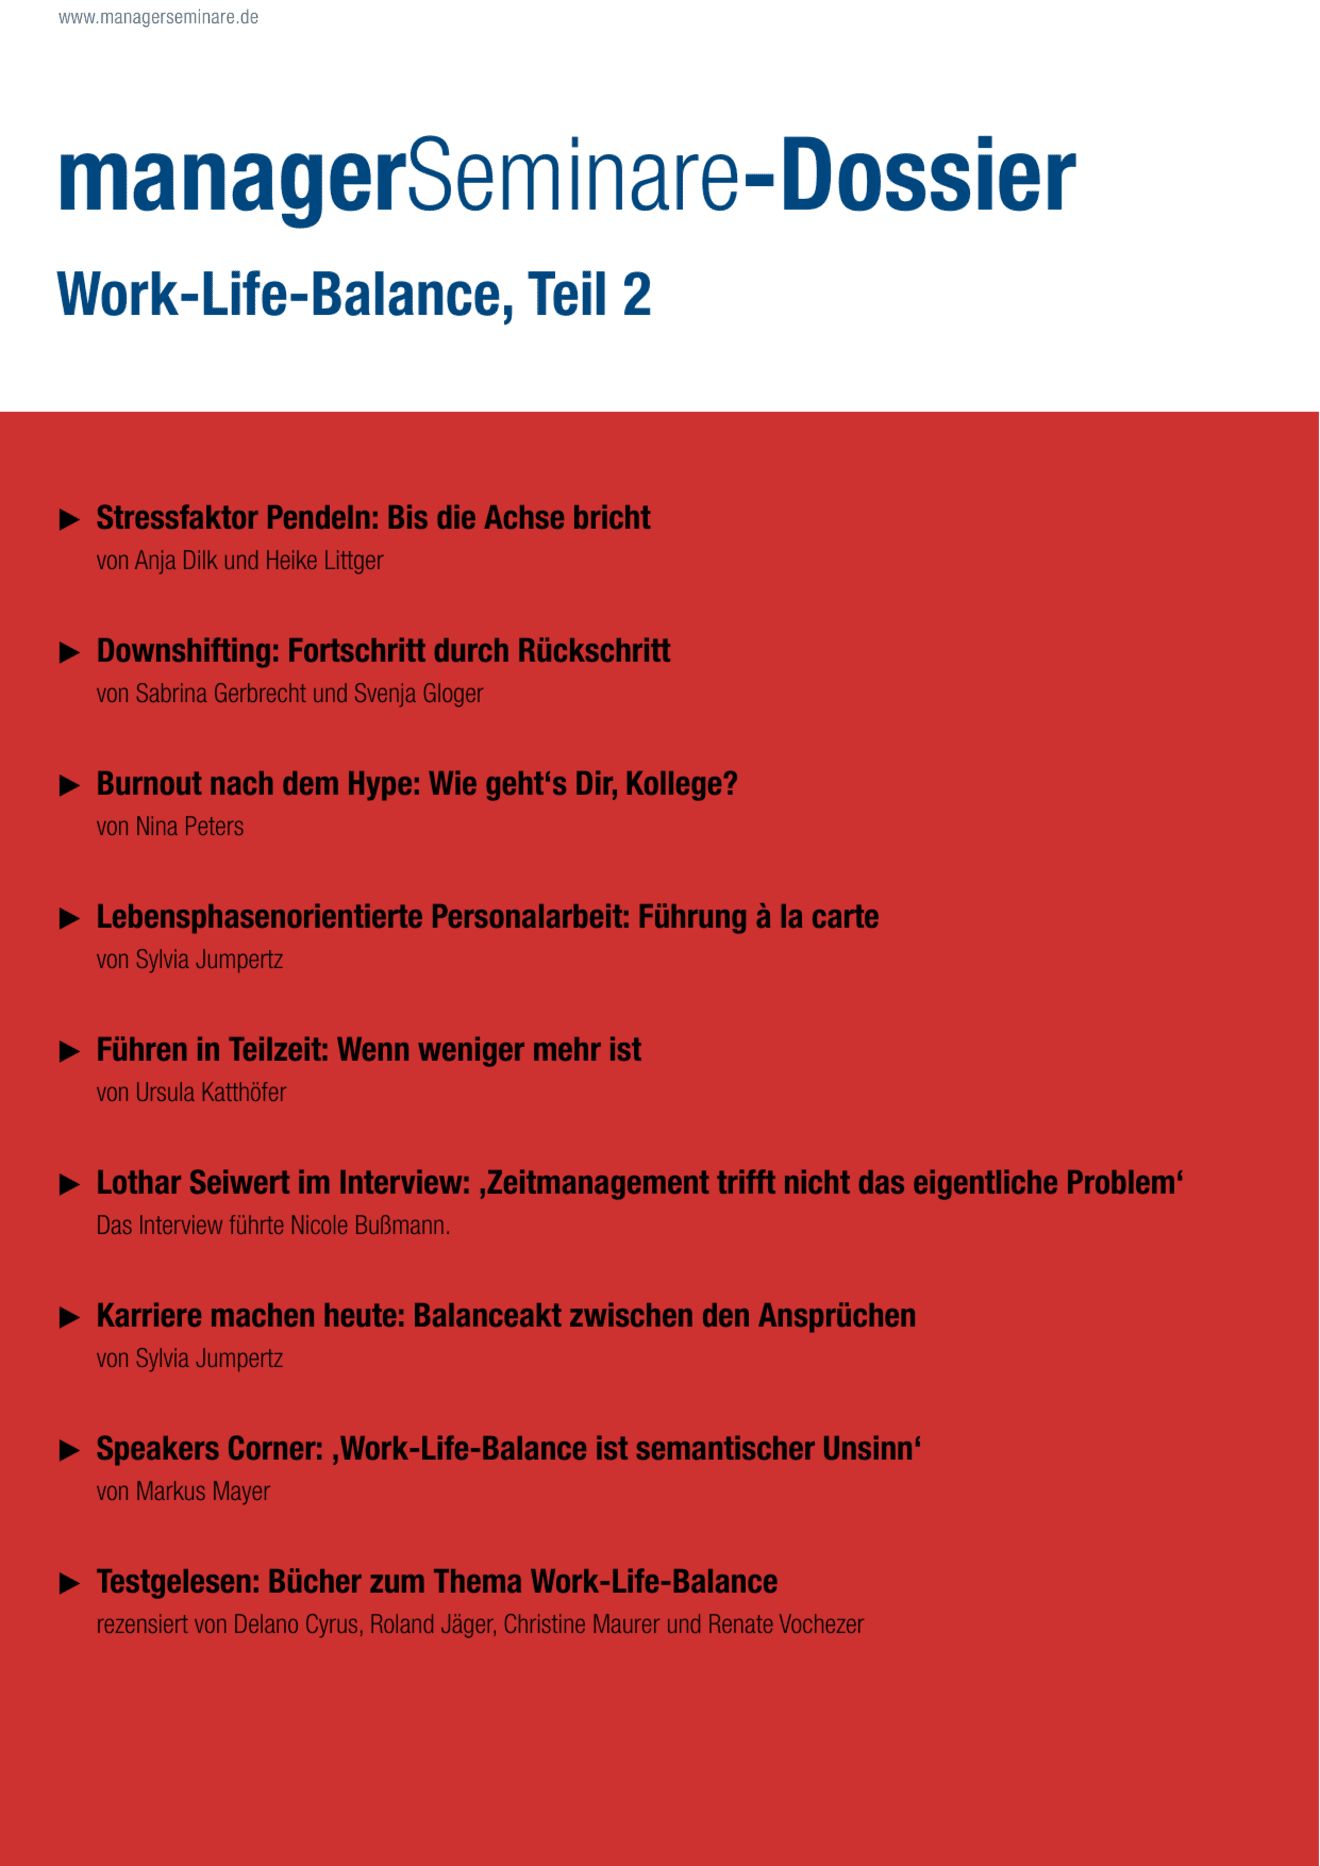 Dossier Work-Life-Balance, Teil 2